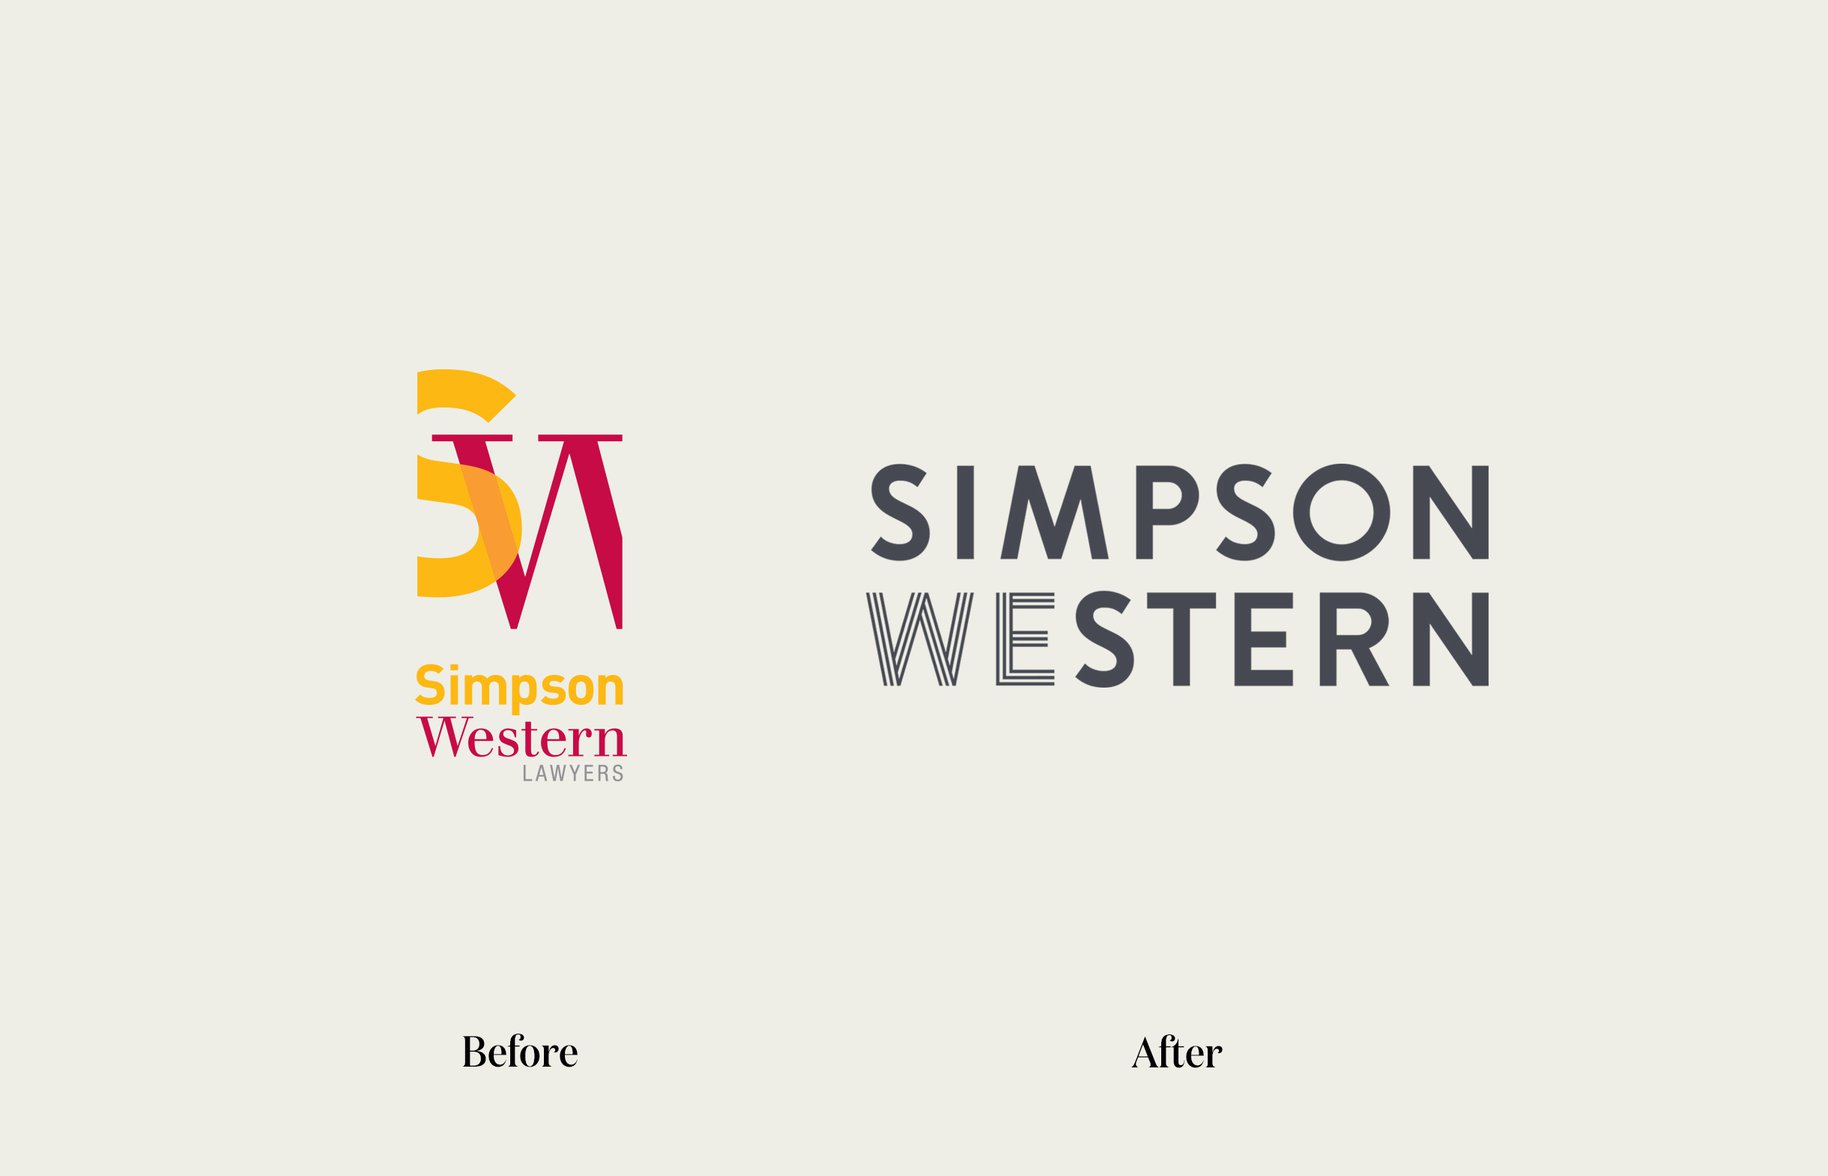 Simpson Western image